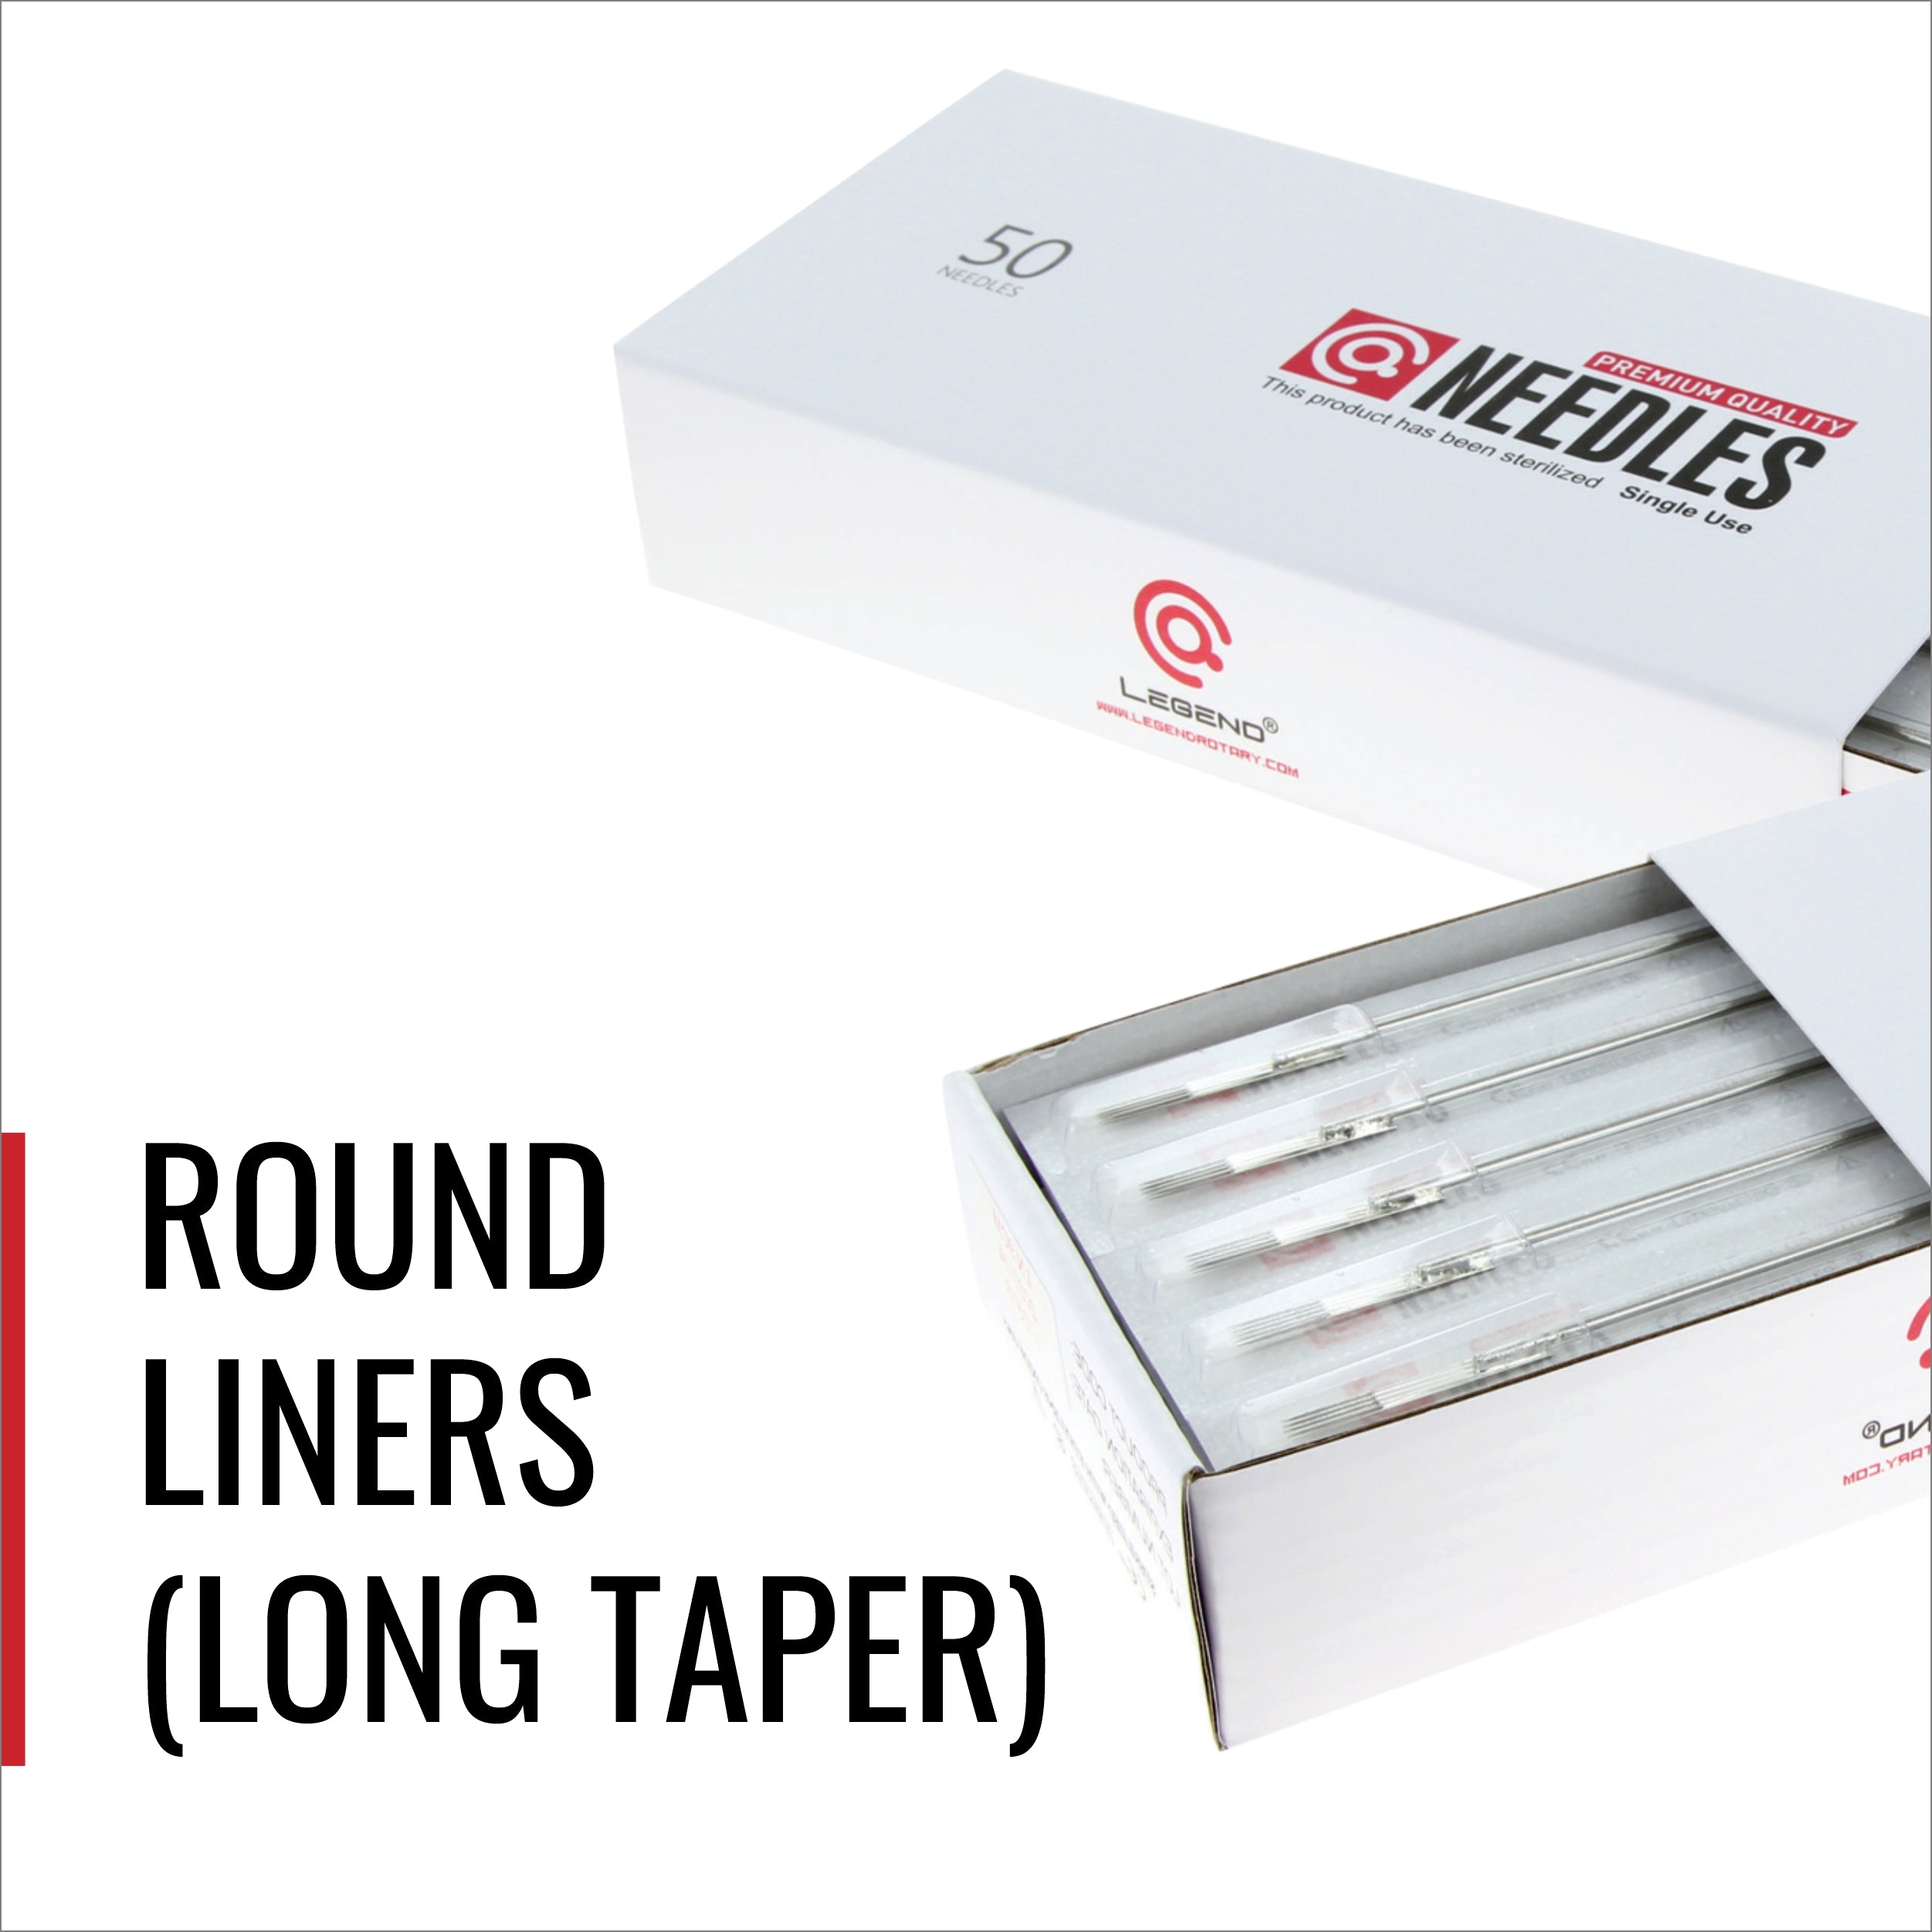 Buy Legend Premium Round Liner Needles with 8mm Long Taper Online